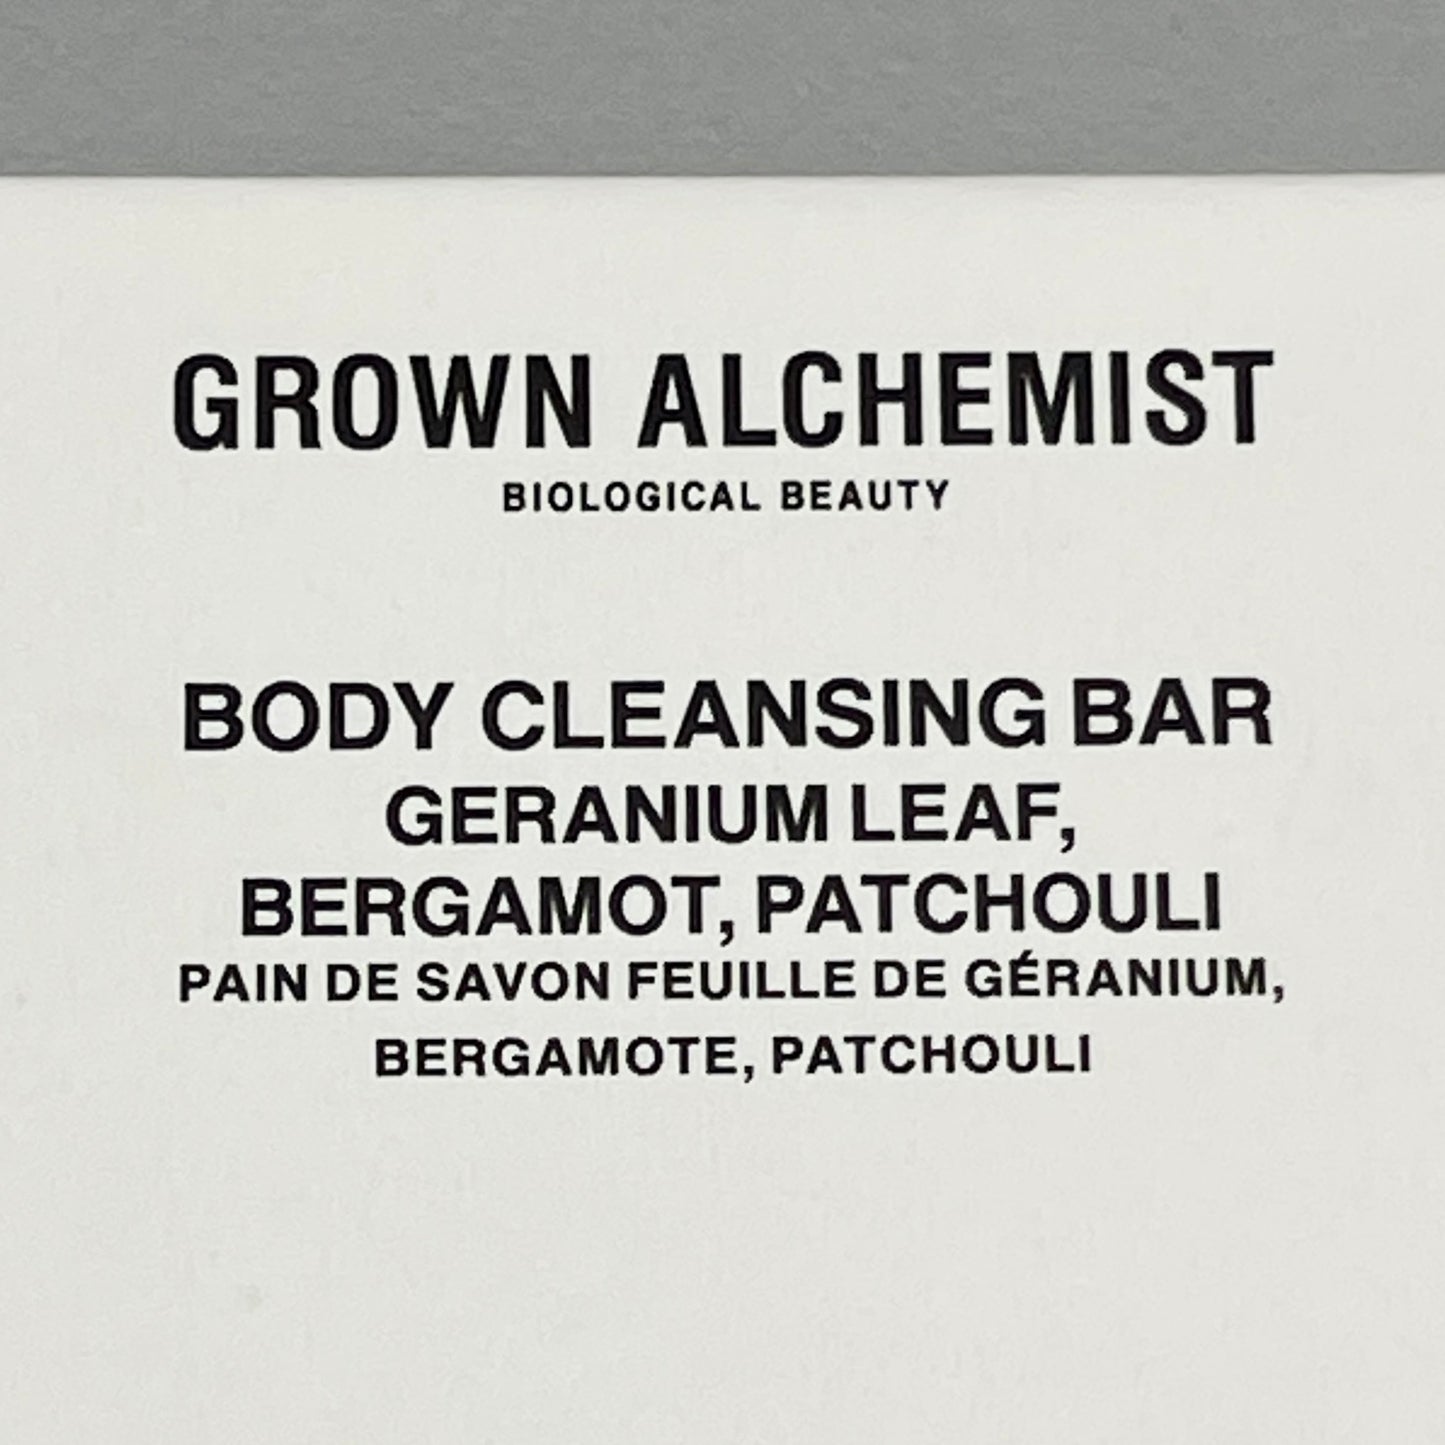 GROWN ALCHEMIST 20-PACK! Body Cleansing Bar Geranium Leaf, Bergamot, Patchouli 1.76 oz (New)